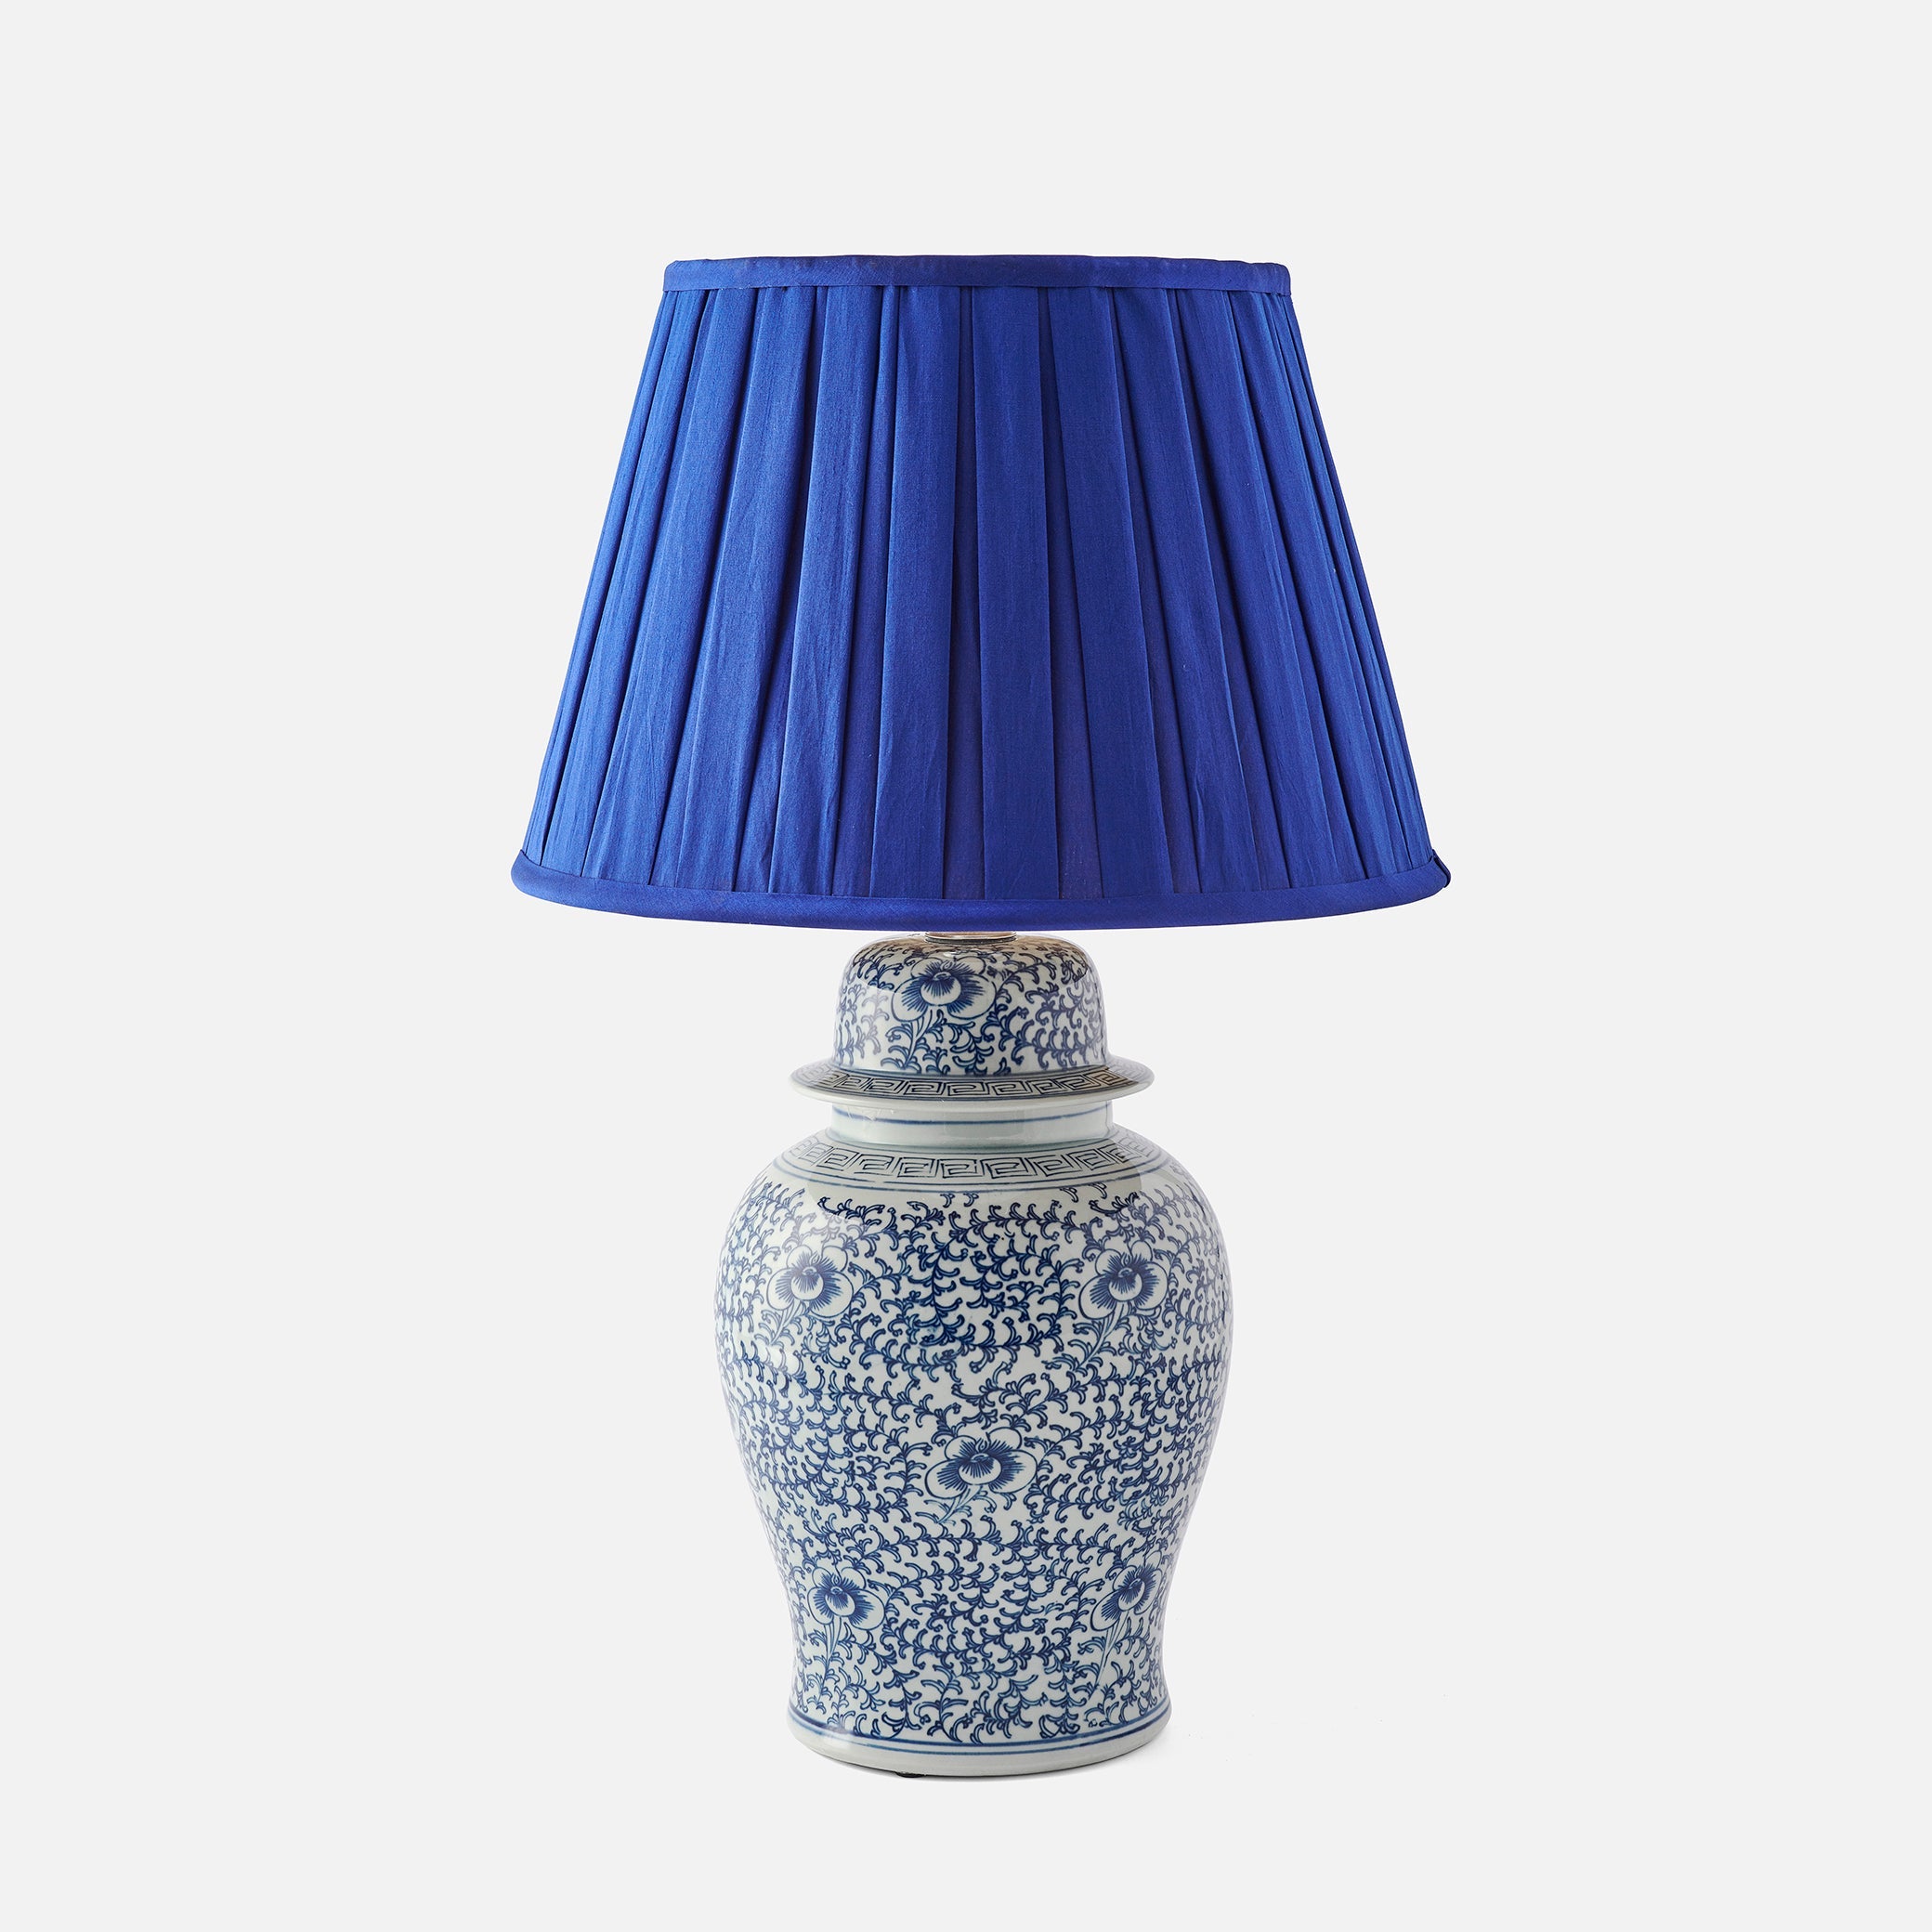 Large Blue and White Decorated Lamp Base - Return